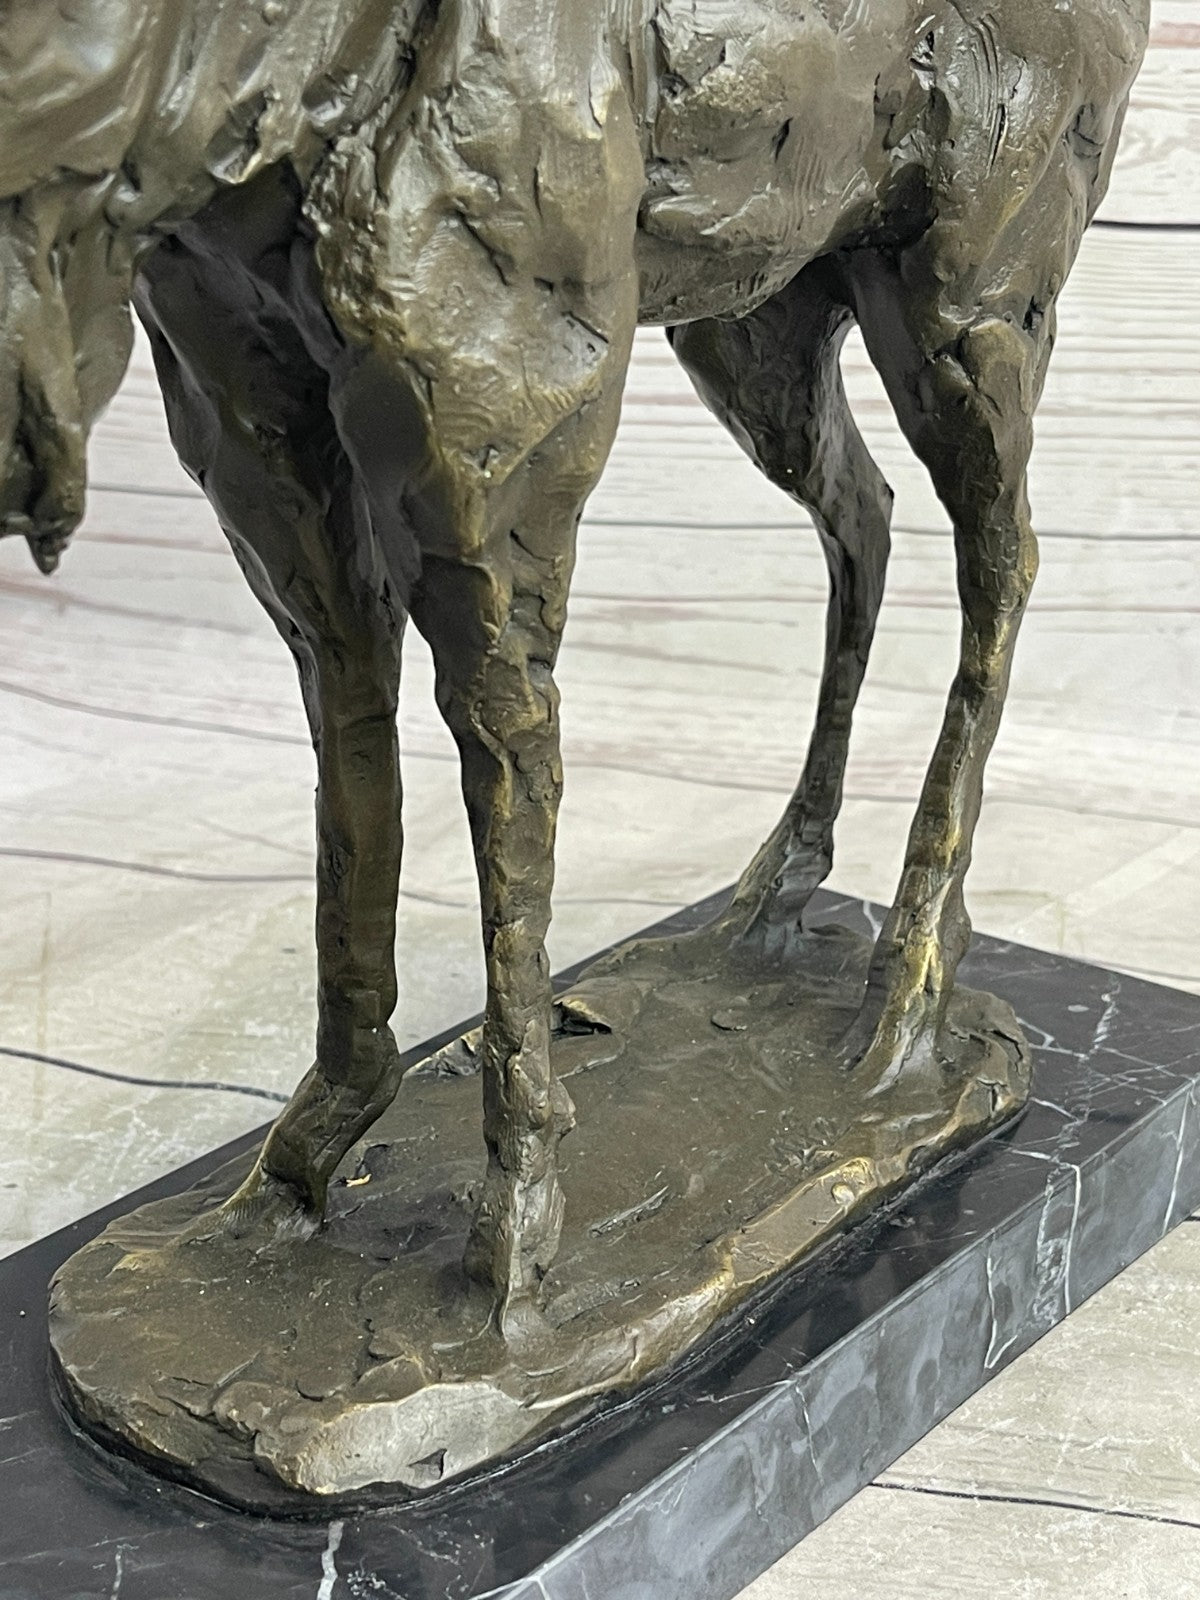 Bronze Marble Sculpture Statue Moose Musuem Quality Masterpiece Figurine